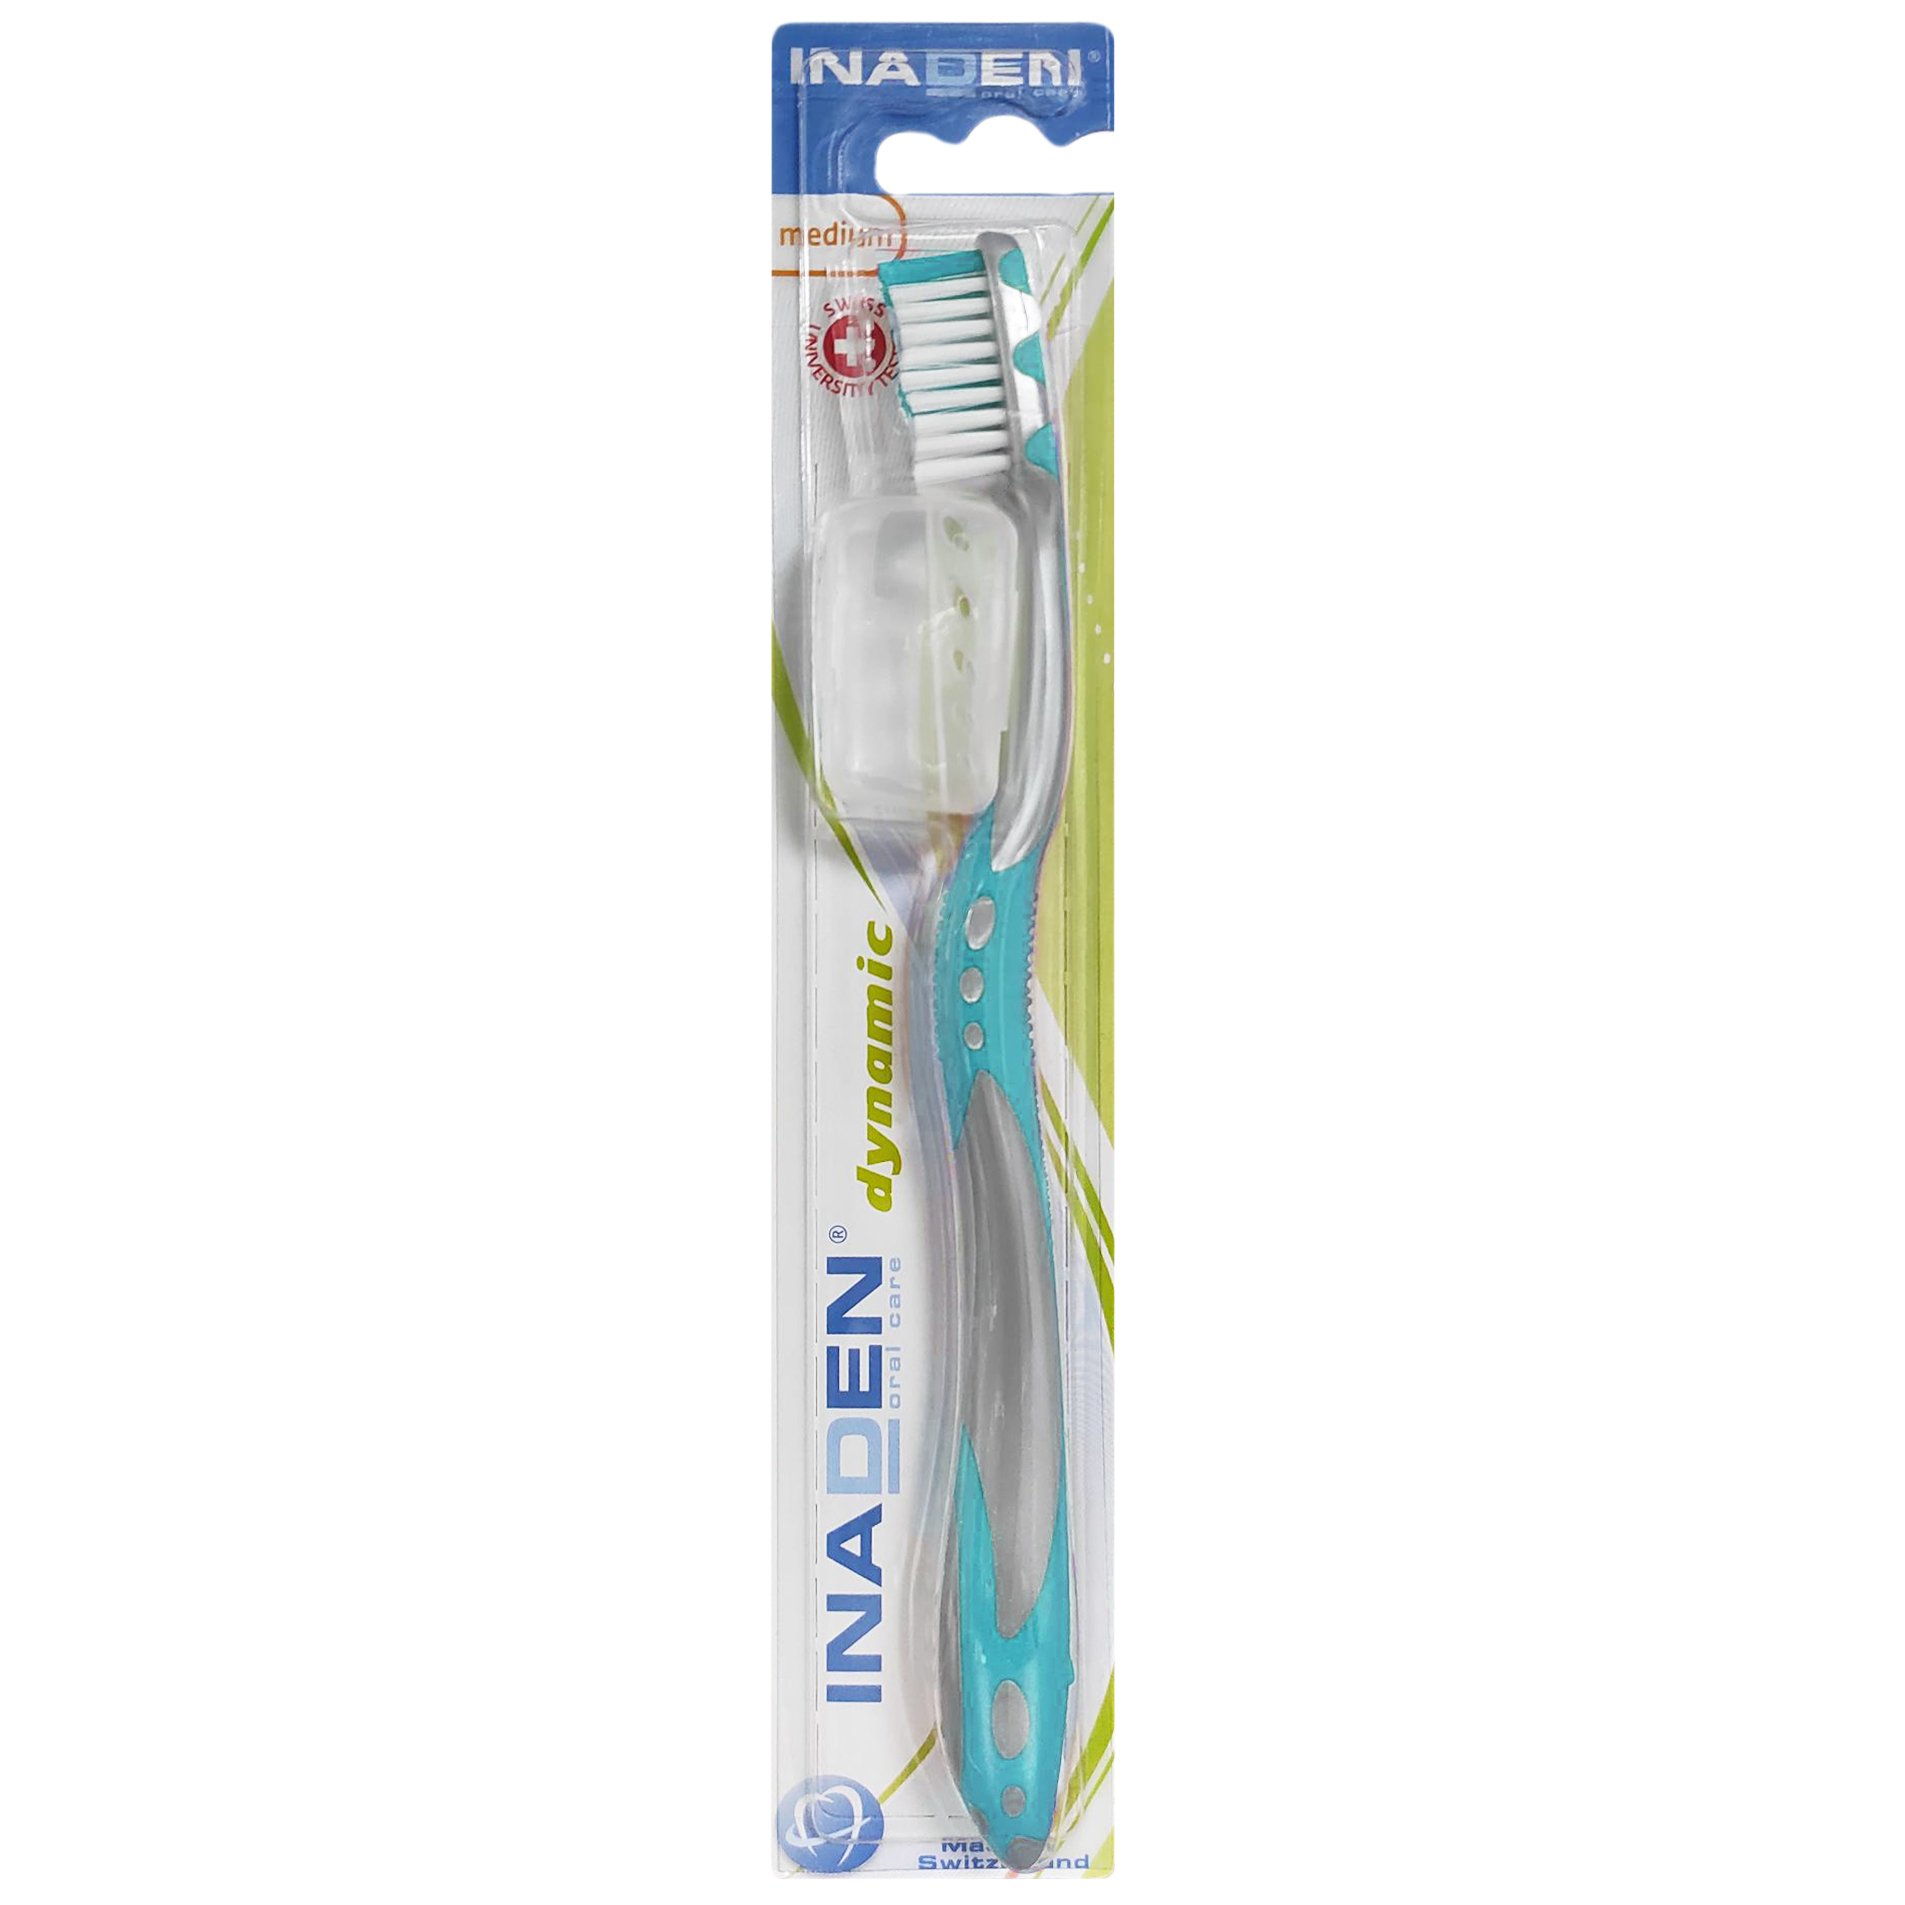 Inaden Dynamic Medium Toothbrush Μέτρια Οδοντόβουρτσα για Βαθύ Καθαρισμό 1 Τεμάχιο – Γαλάζιο